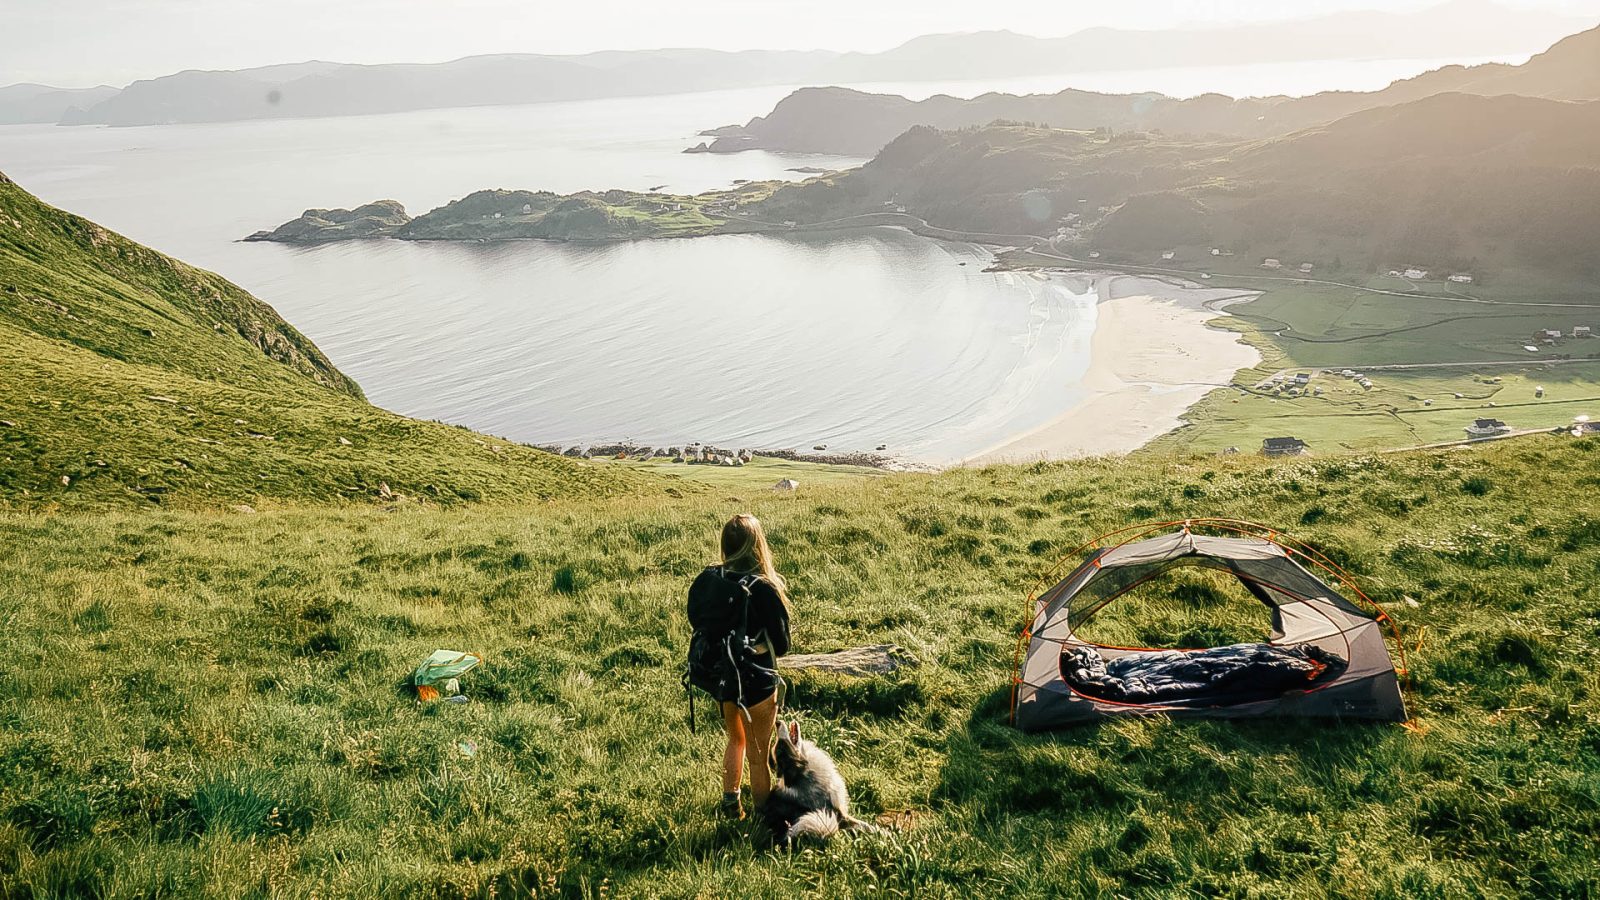 Refsviksanden+Hike+Beach+Norway+Tent+Dog+Camping